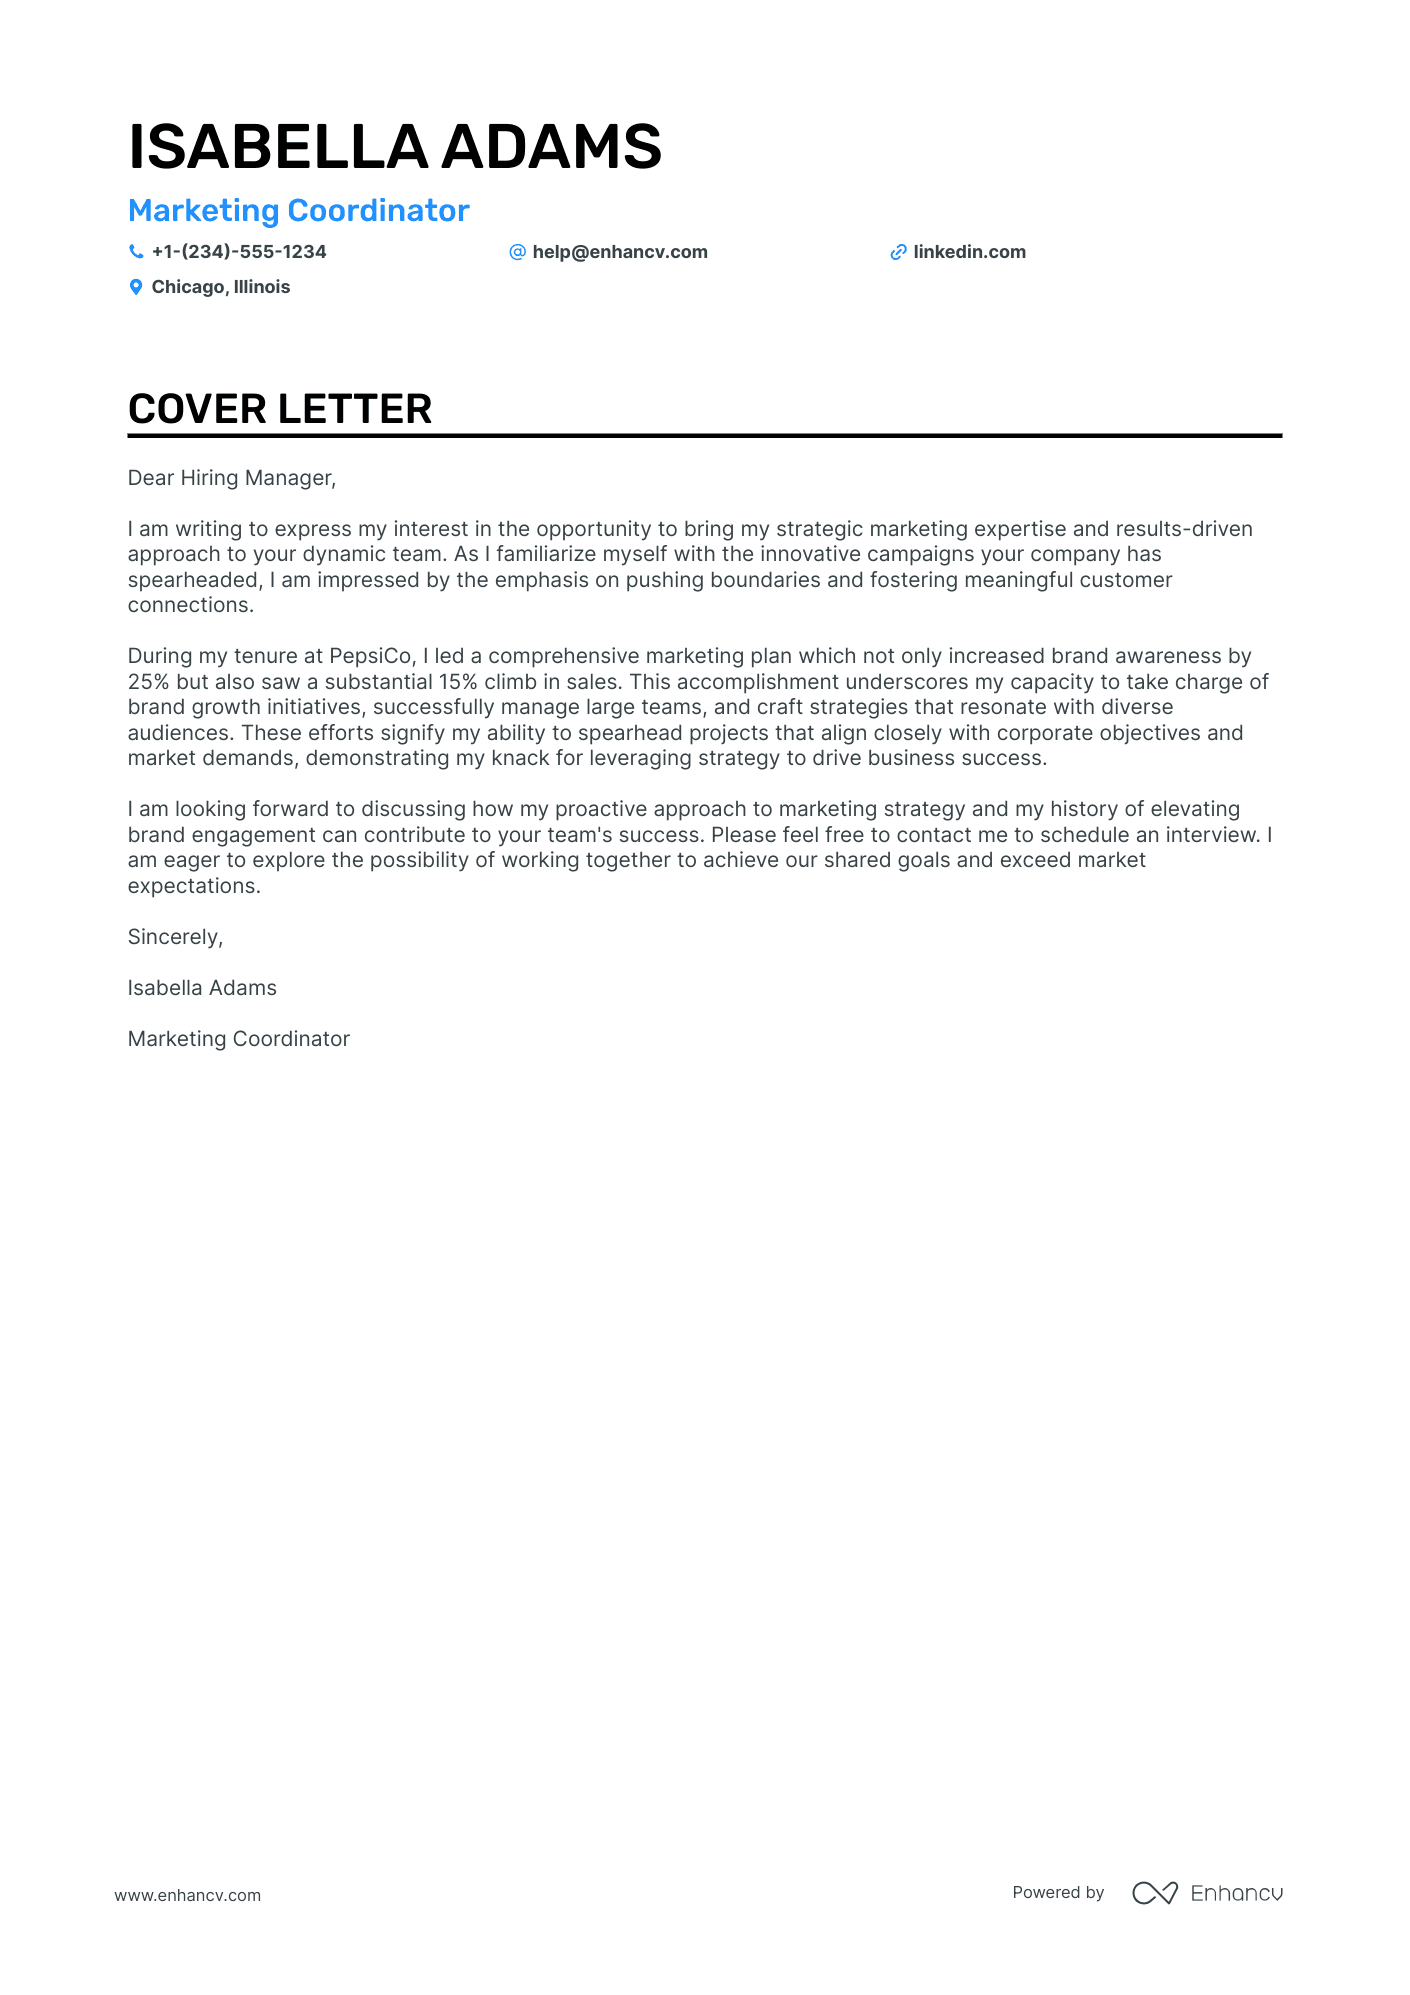 Brand Ambassador cover letter